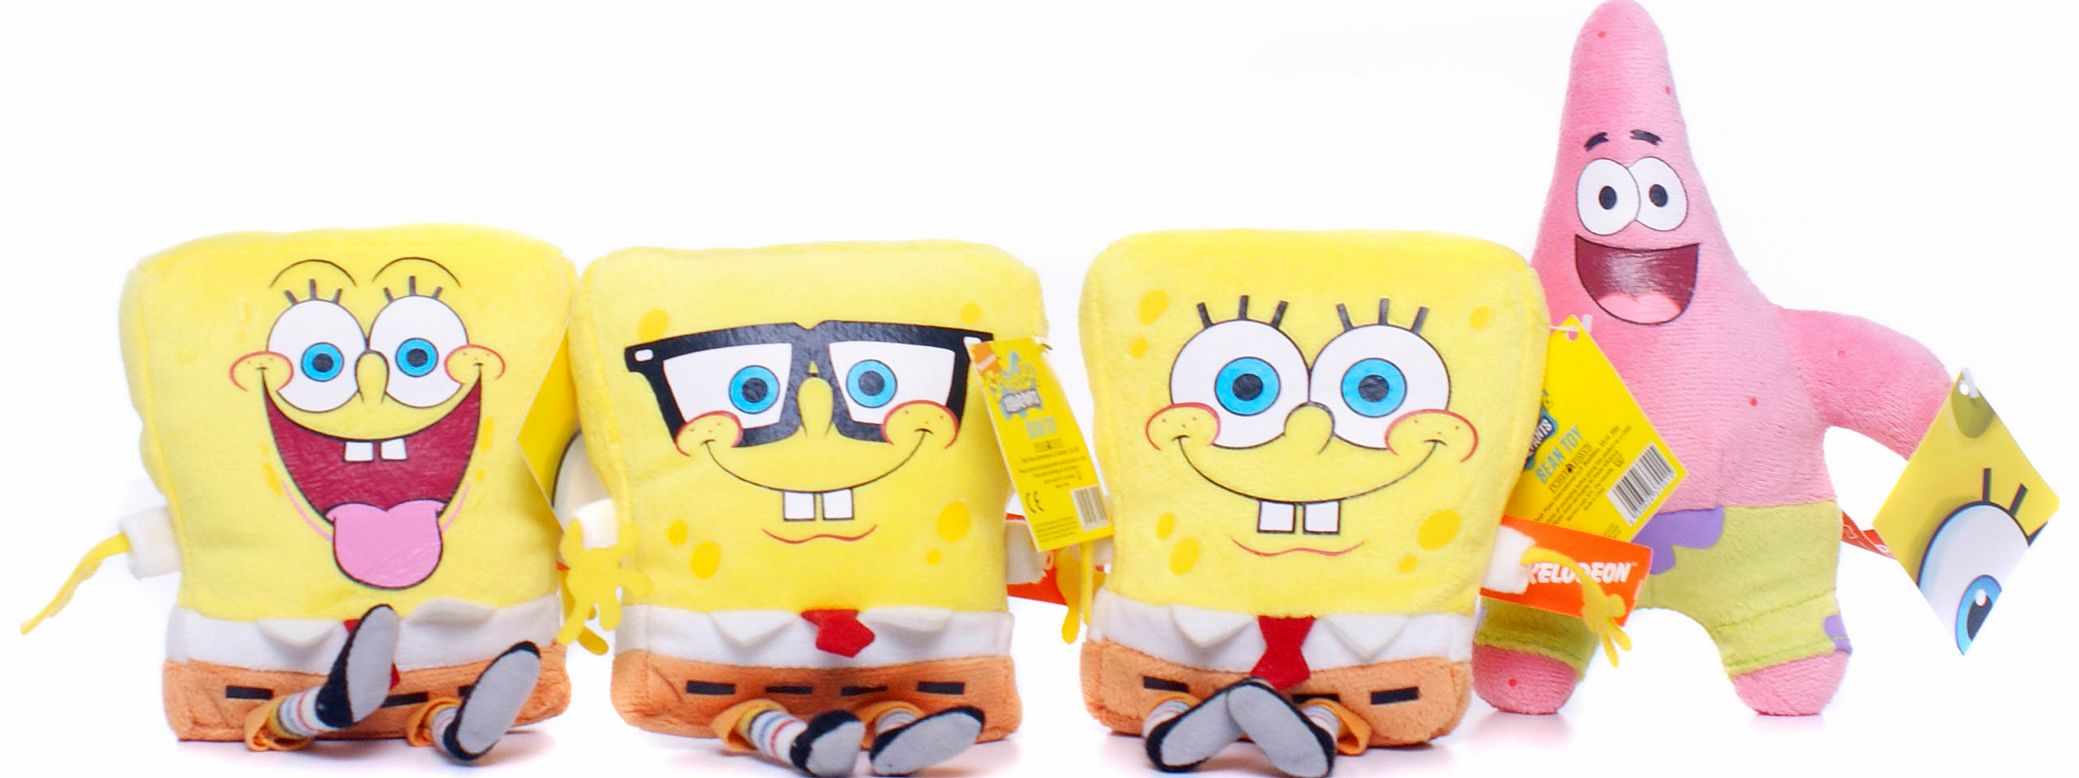 Disney Spongebob Squarepants Soft Bean Toy - Assorted